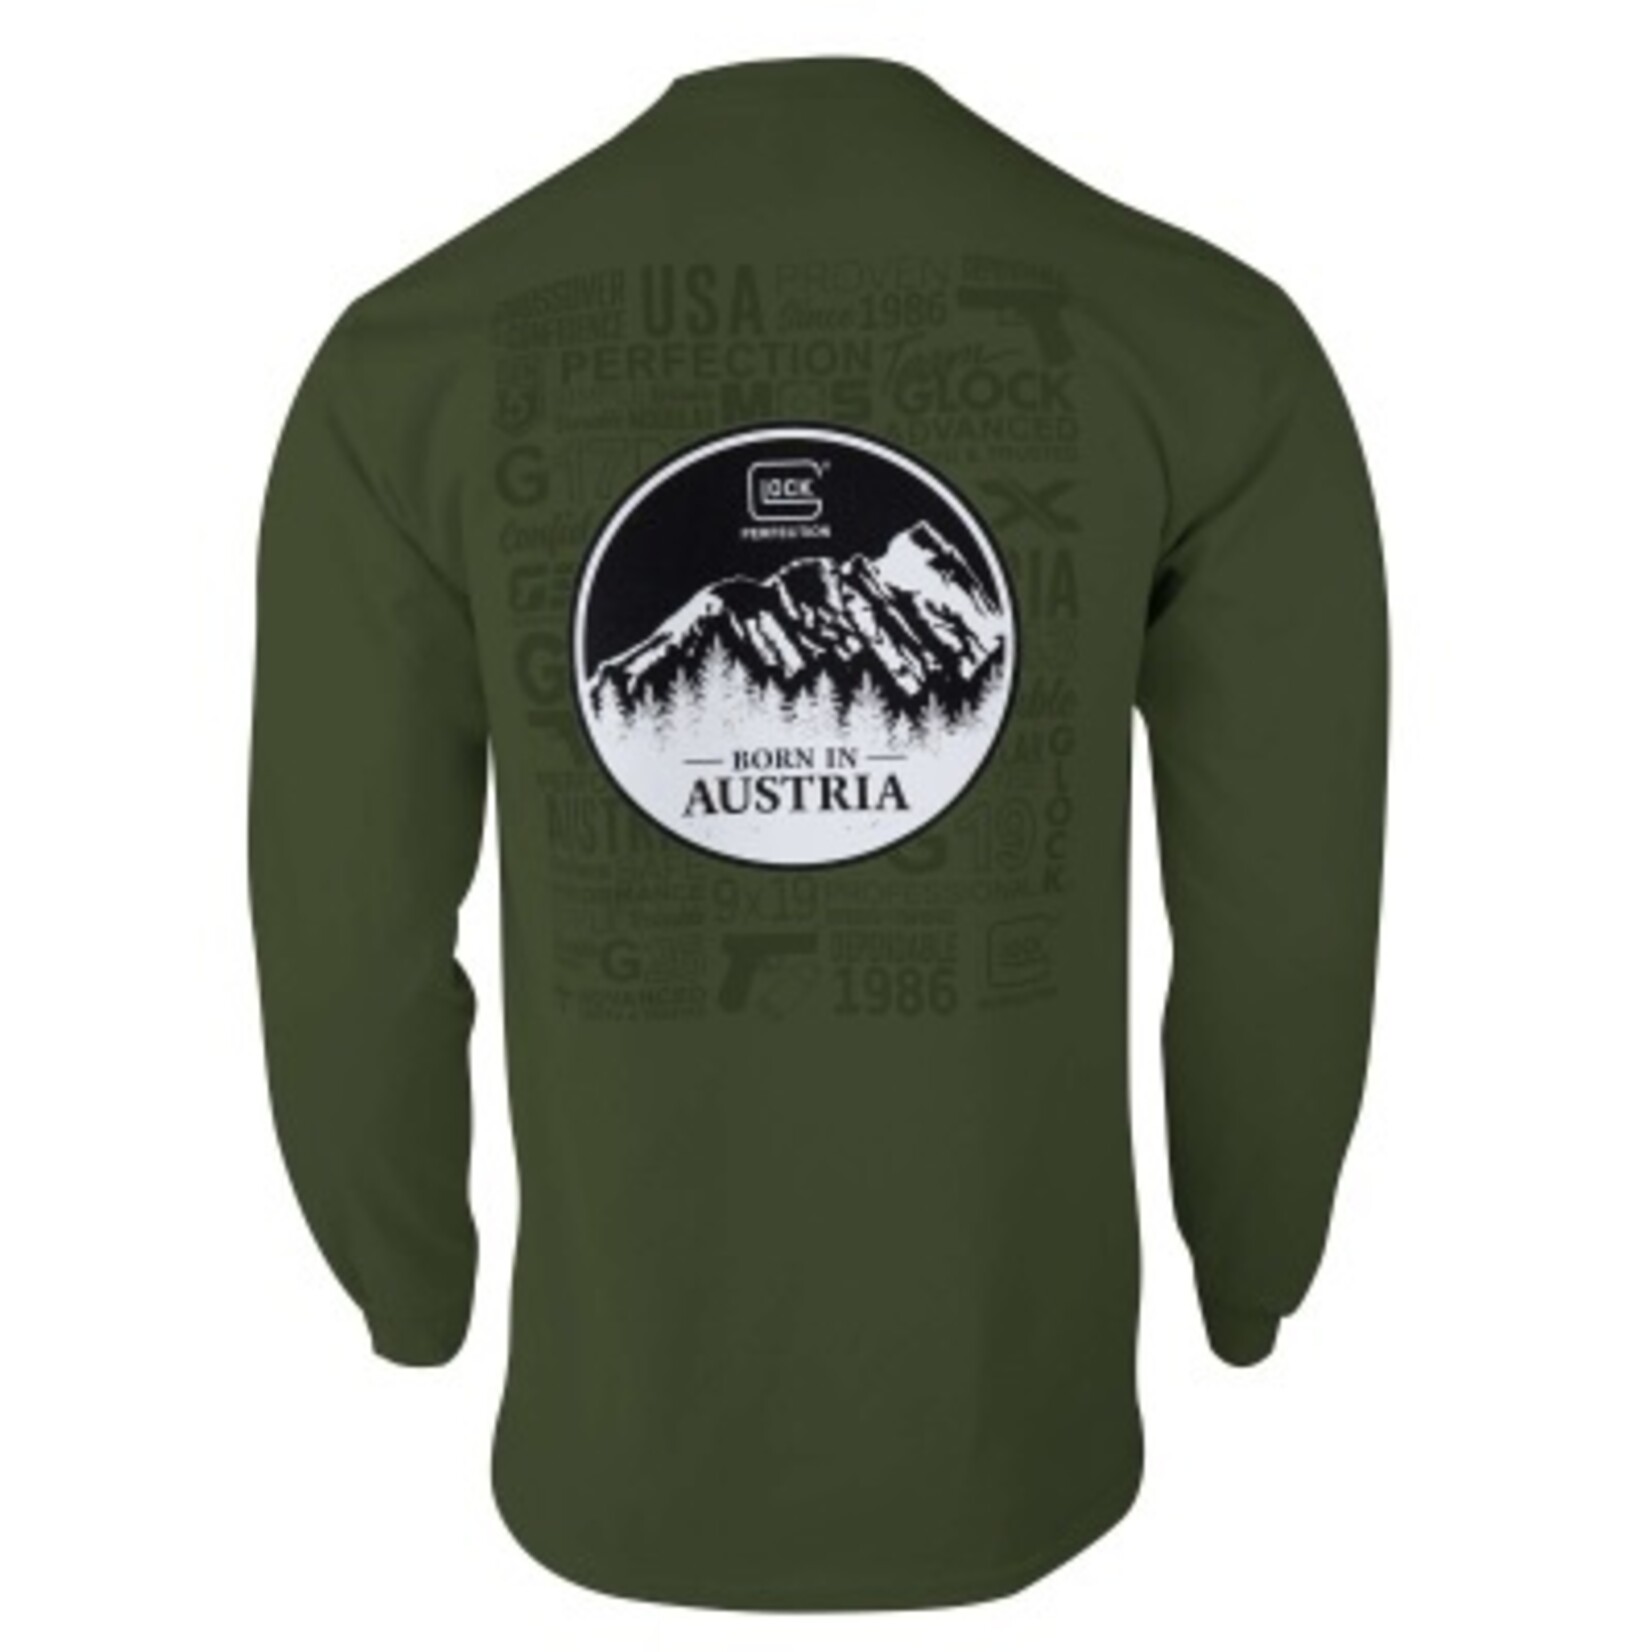 GLOCK Glock Born in Austria Long Sleeve Shirt Military Green S